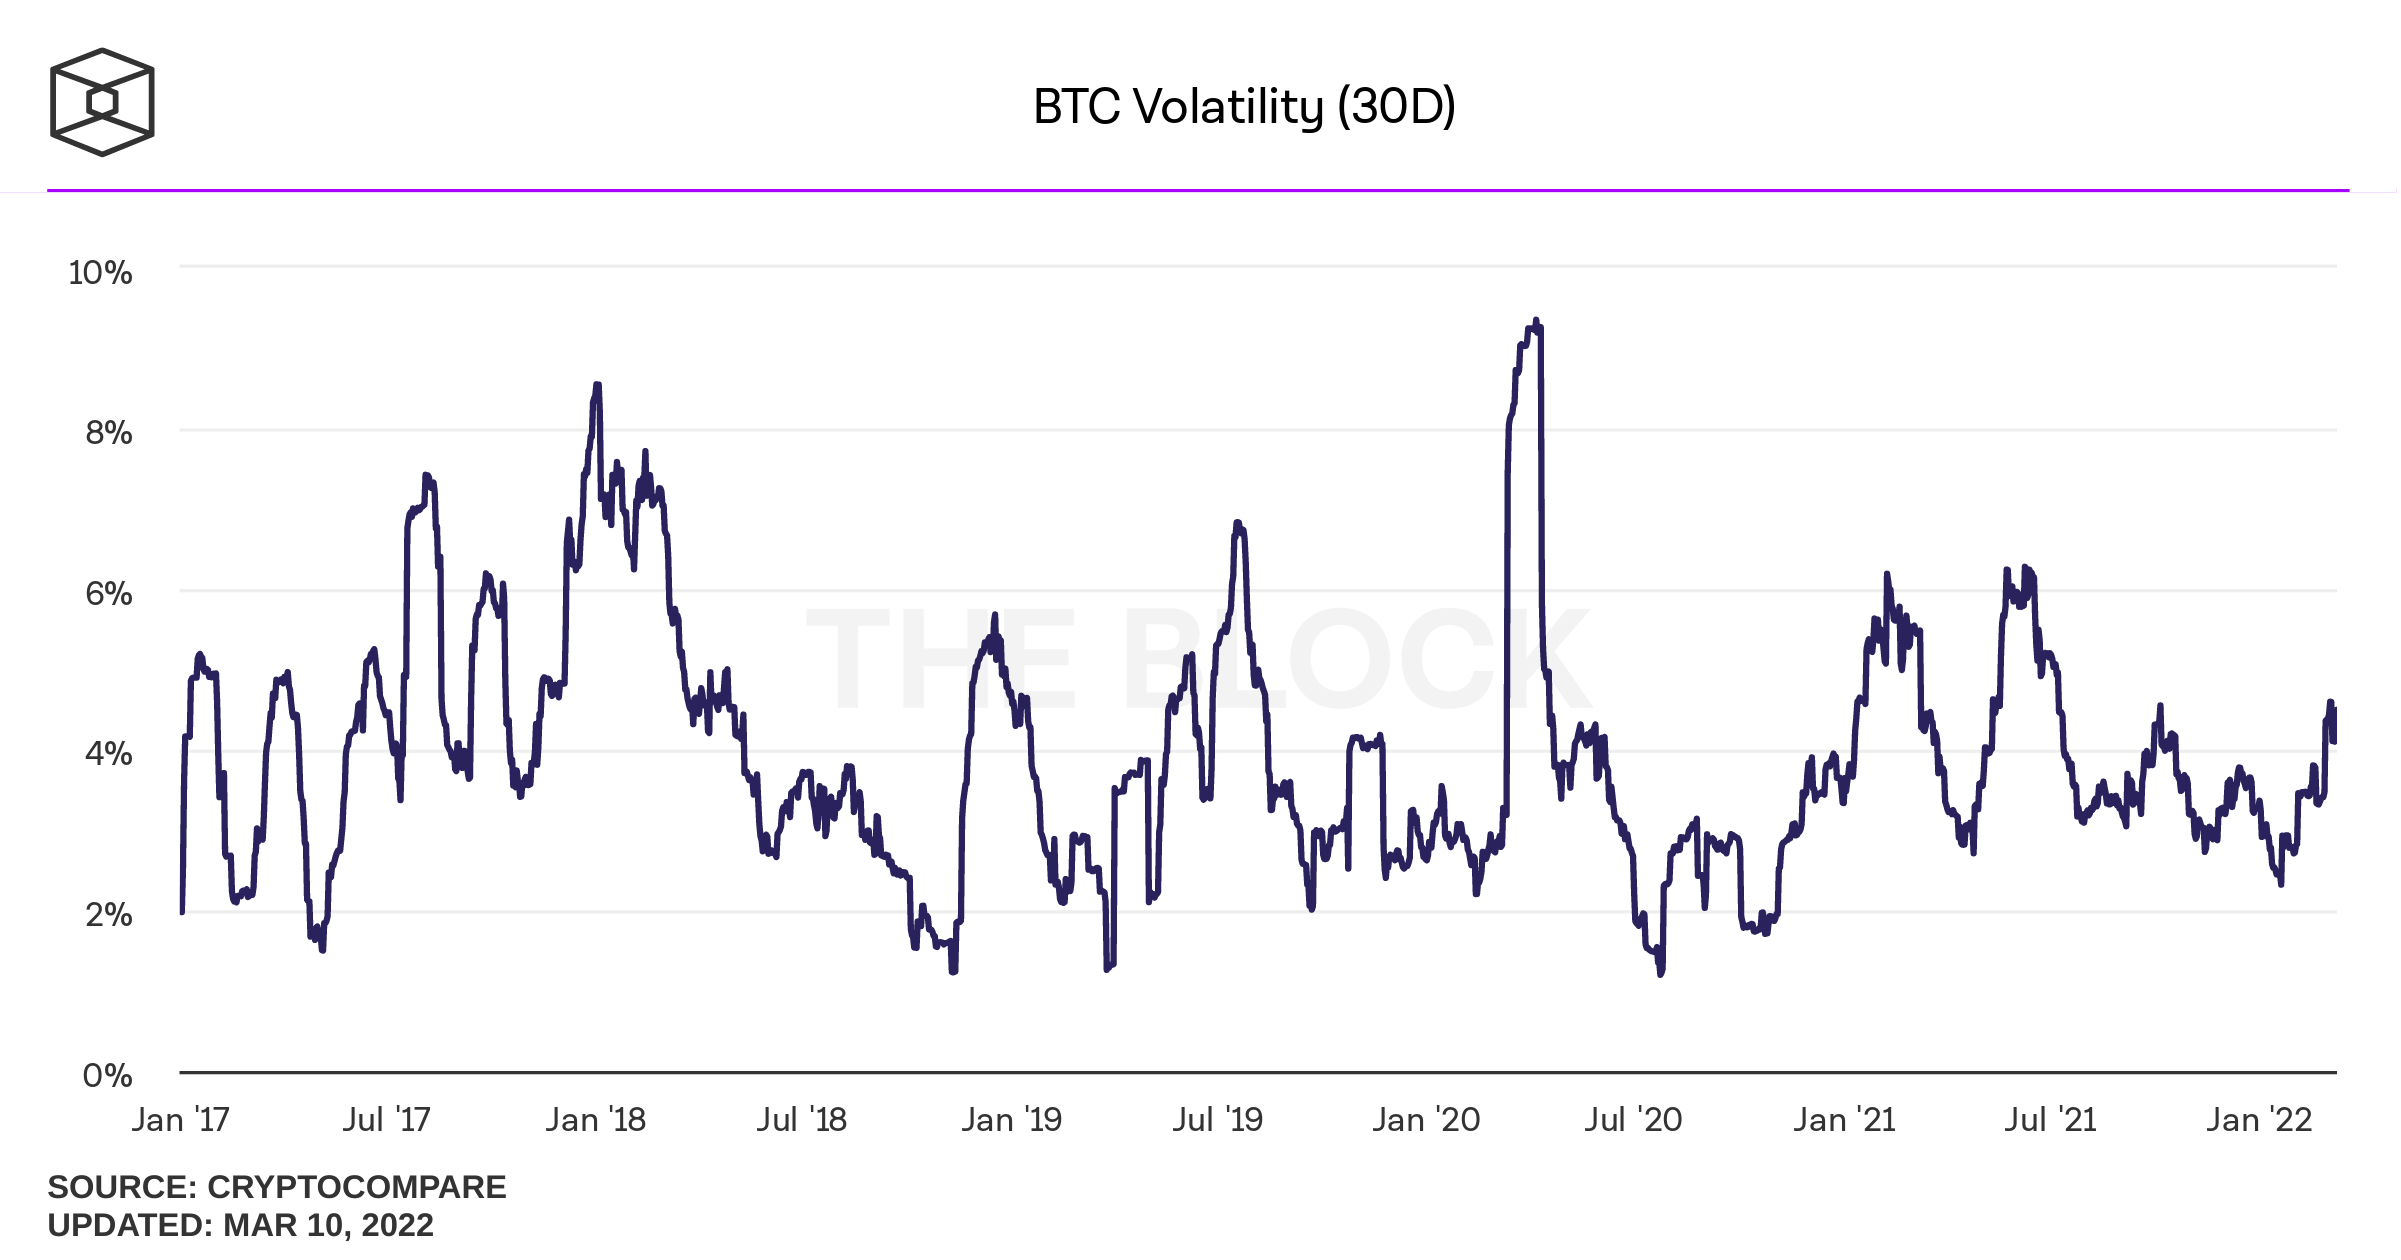 30-day moving average volatility index for Bitcoin via theblockcrypto.com